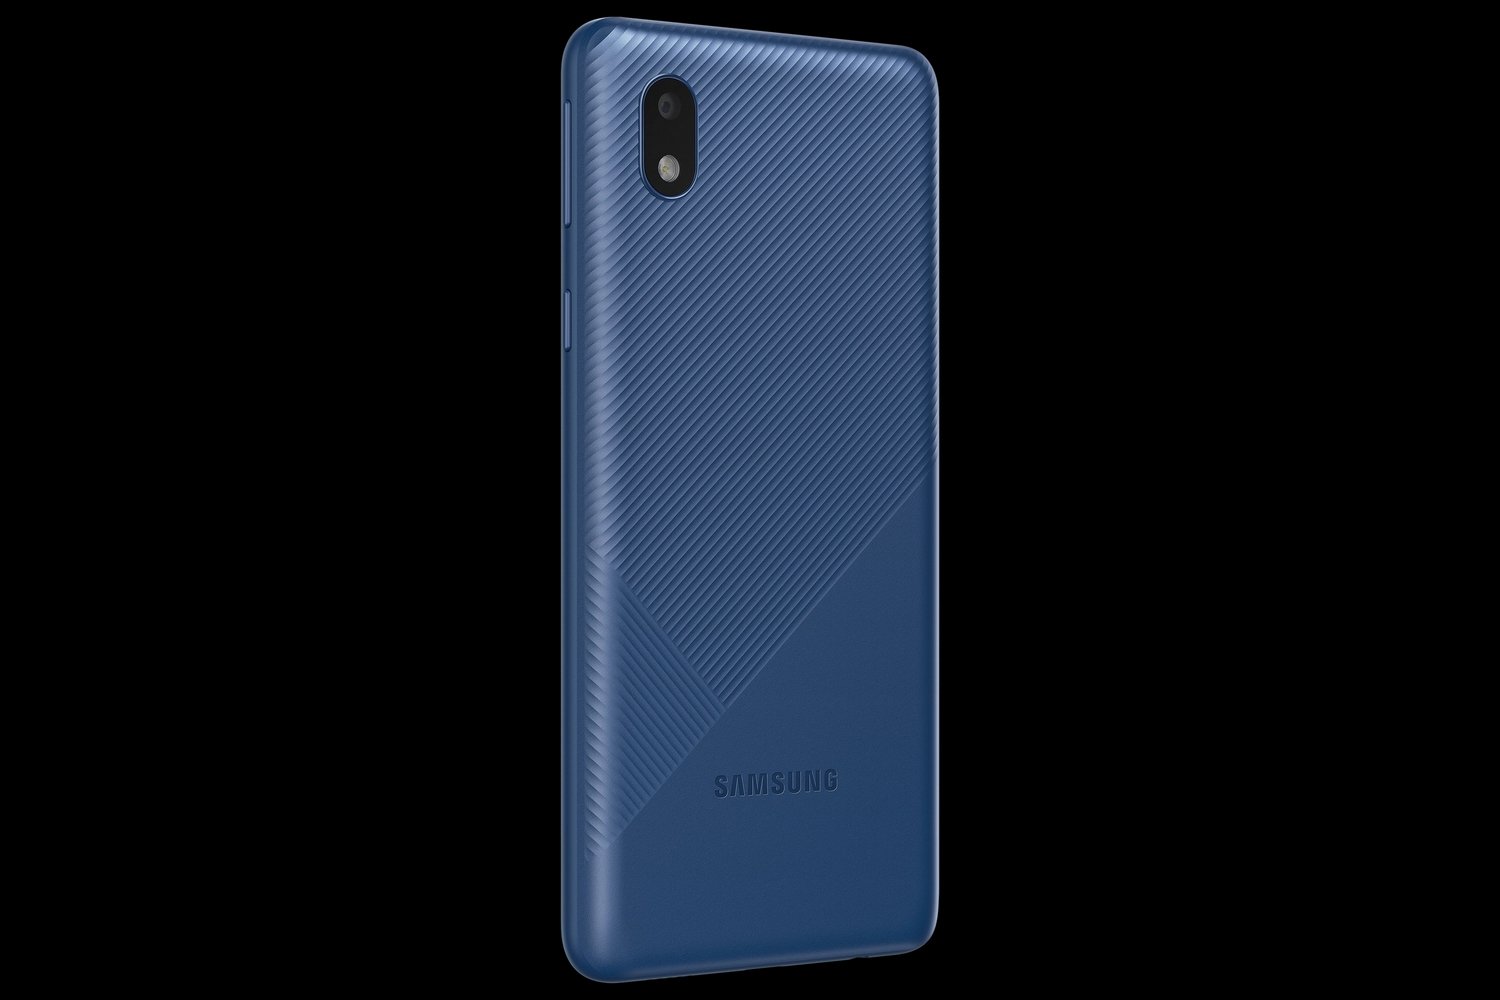 Смартфон Samsung Galaxy A01 Core 16gb Black